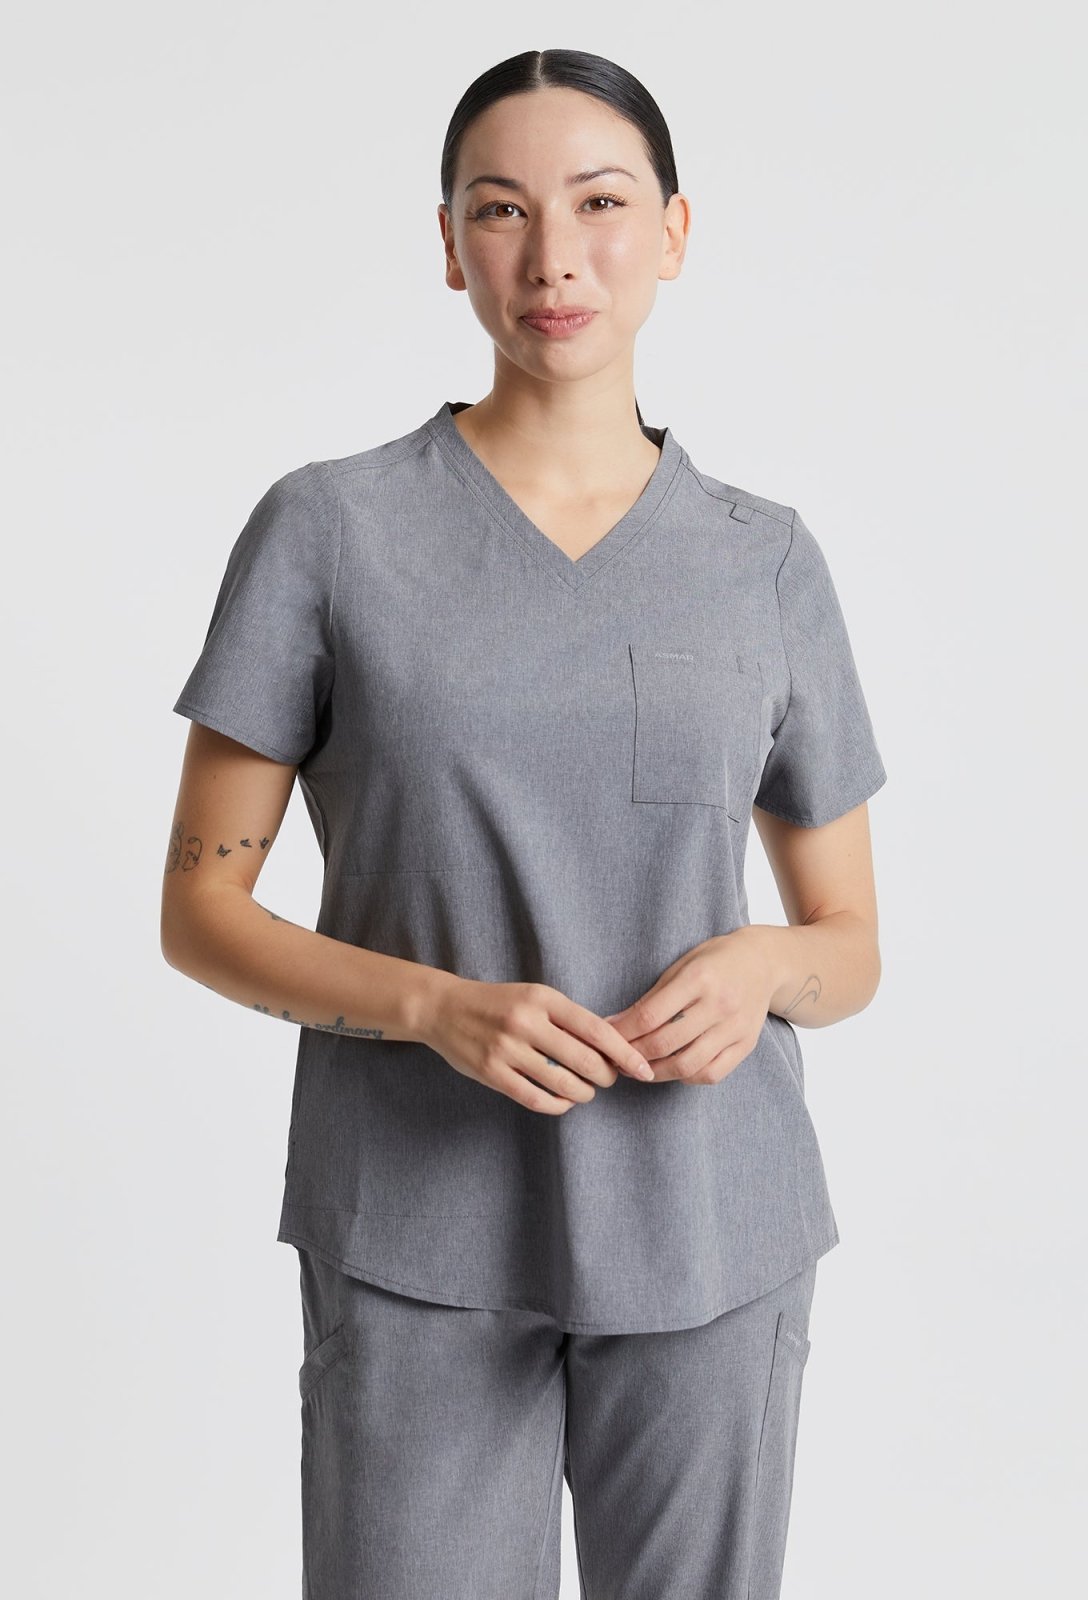 Heather Grey Florence 2 Pocket Scrub Top – Noel Asmar Uniforms